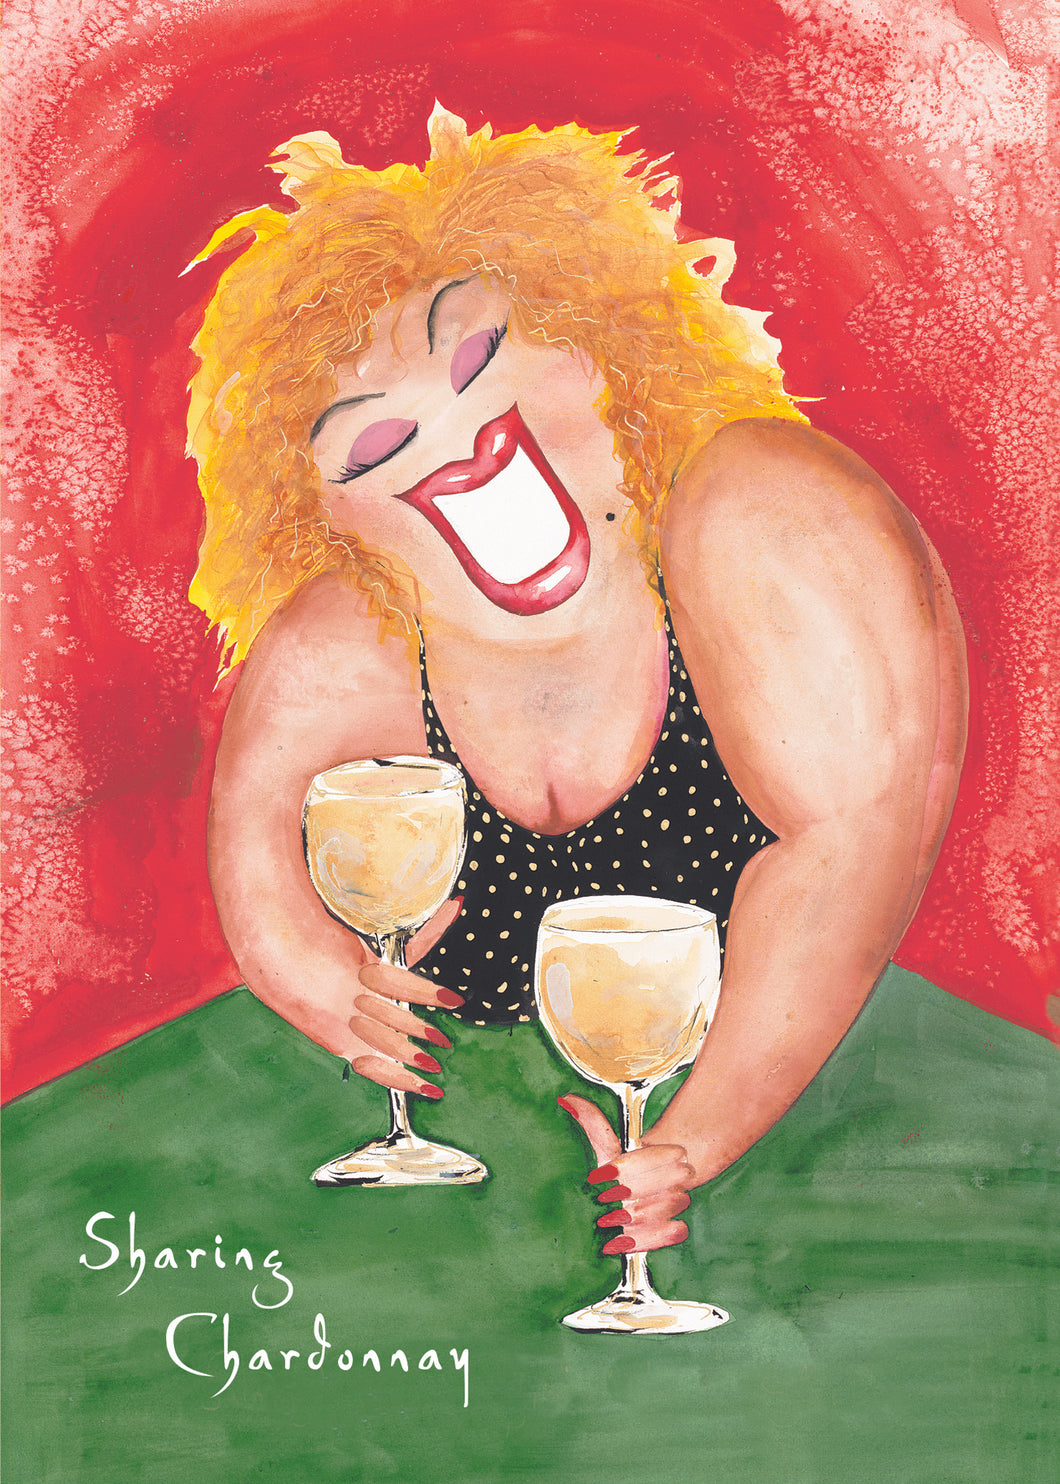 Sharing Chardonnay greeting card